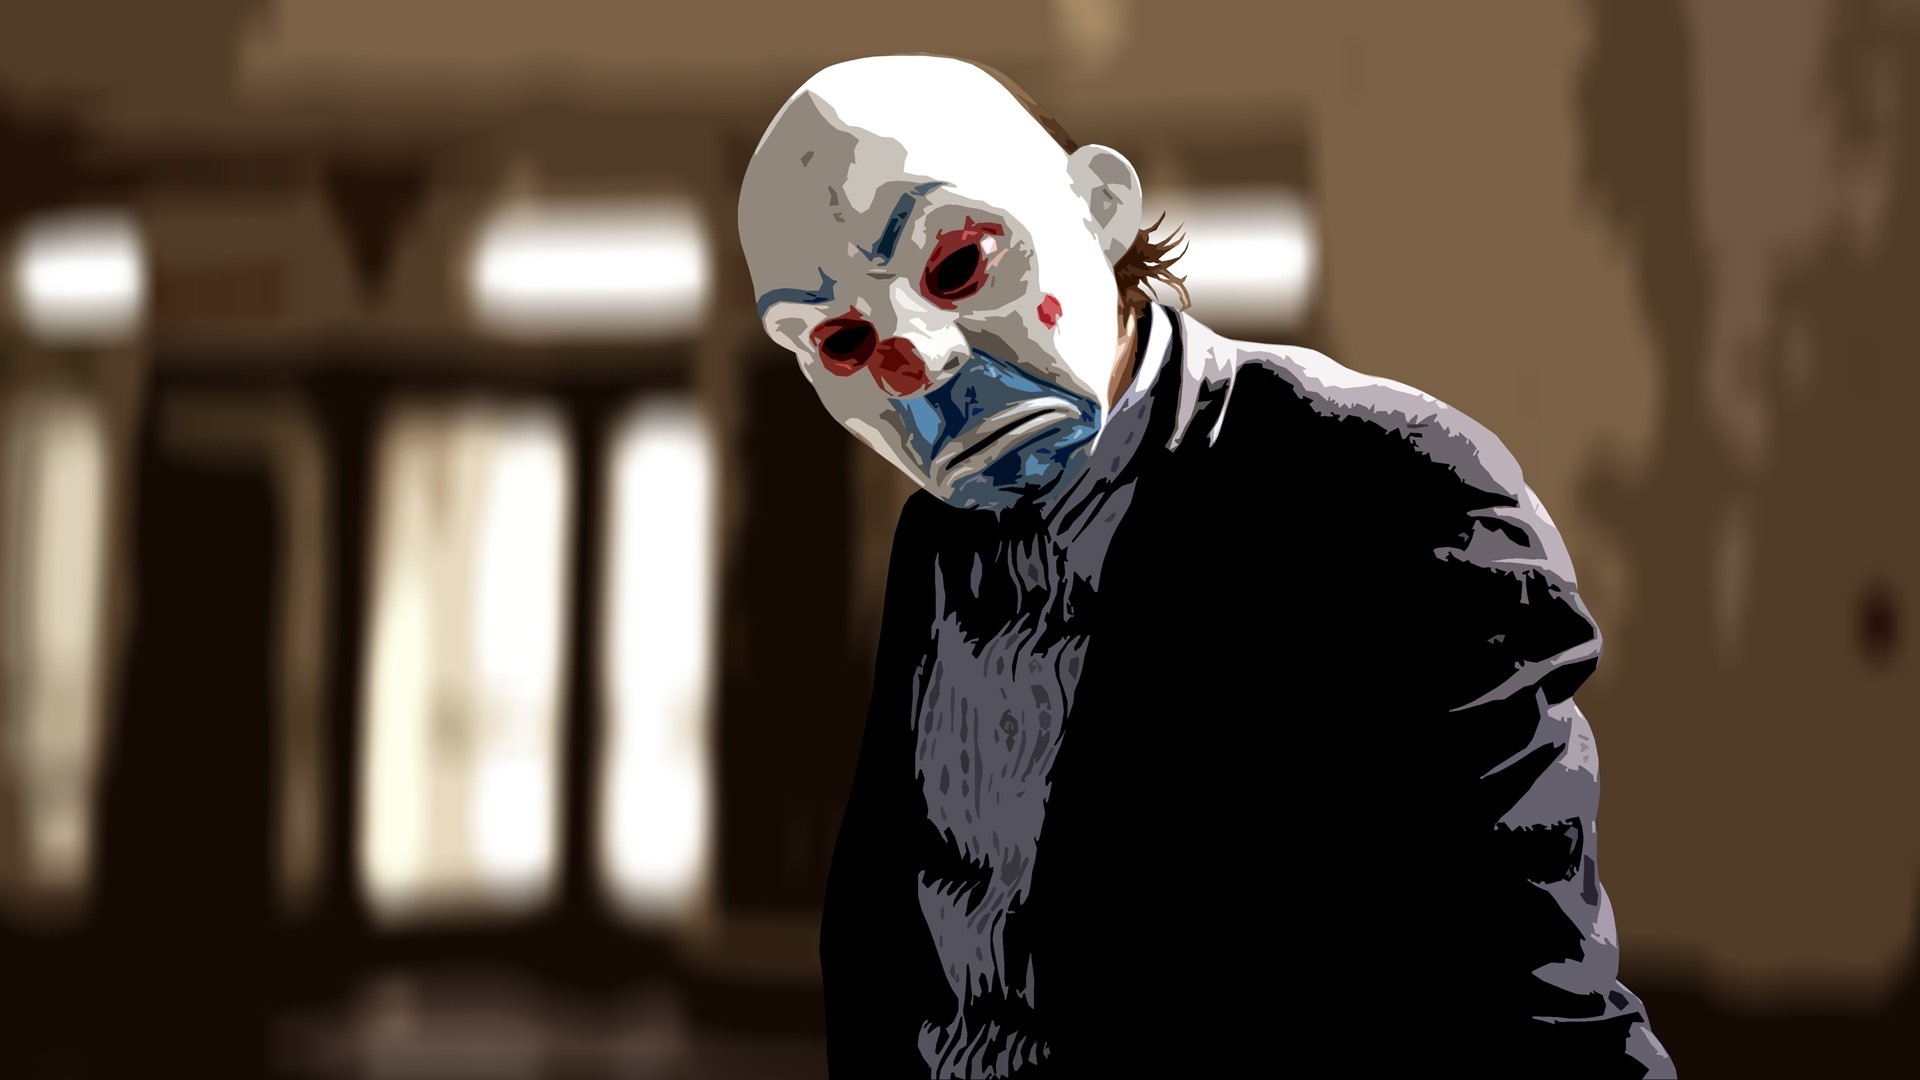 General 1920x1080 clown The Dark Knight MessenjahMatt Joker artwork movies mask DC Comics Christopher Nolan Warner Brothers